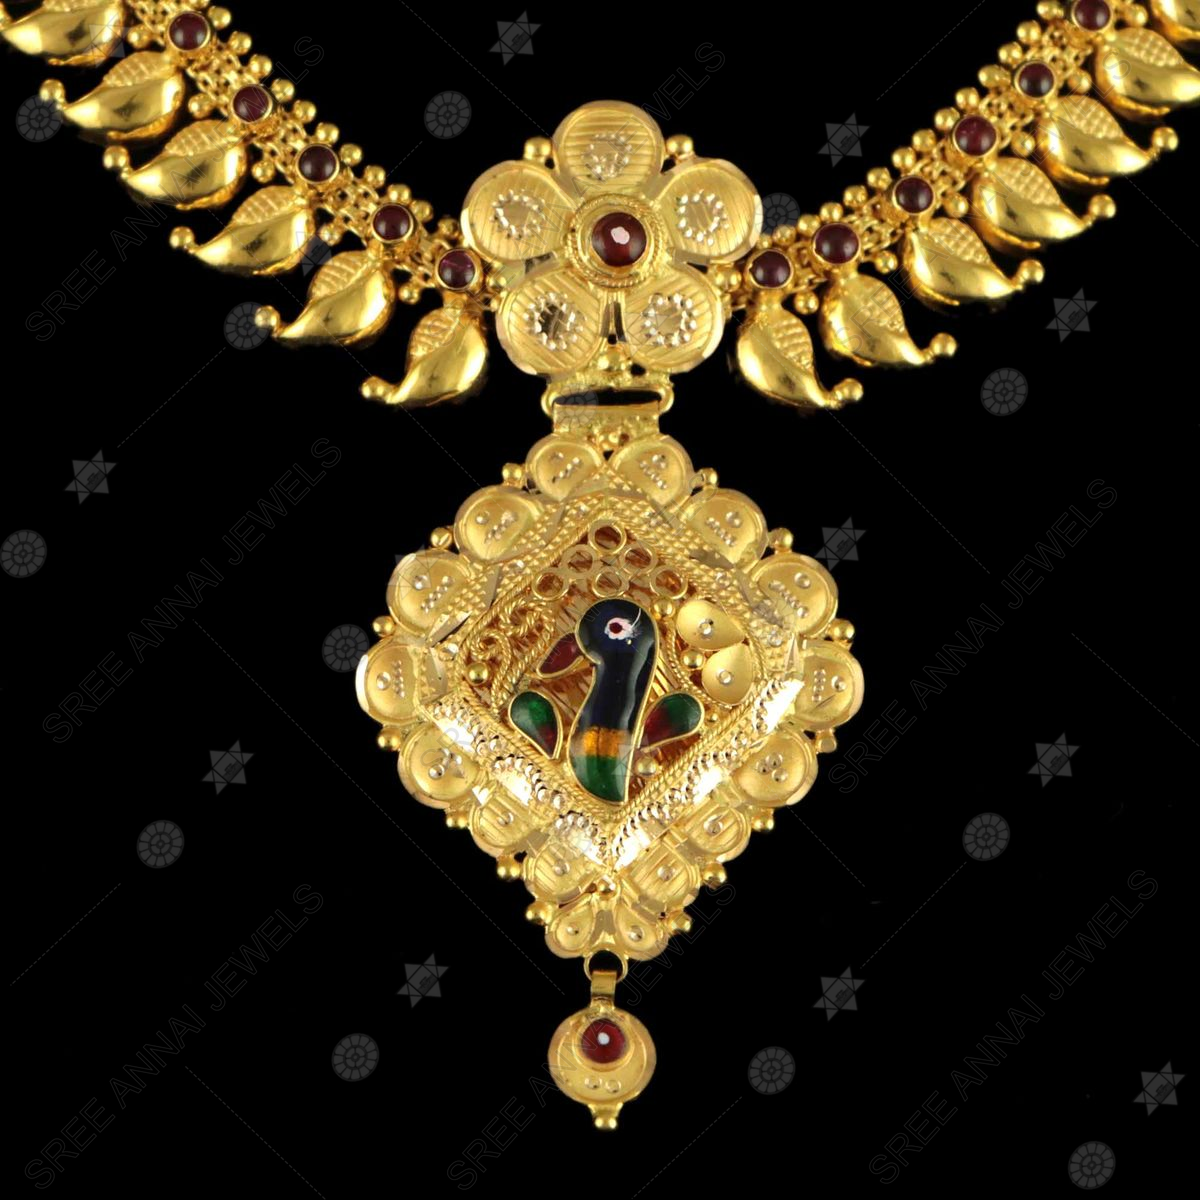 22ct Gold Bridal Necklace in Filigree Design - £885.00 | Gold bridal  necklace, Fashion jewelry necklaces gold, Gold bridal jewellery sets